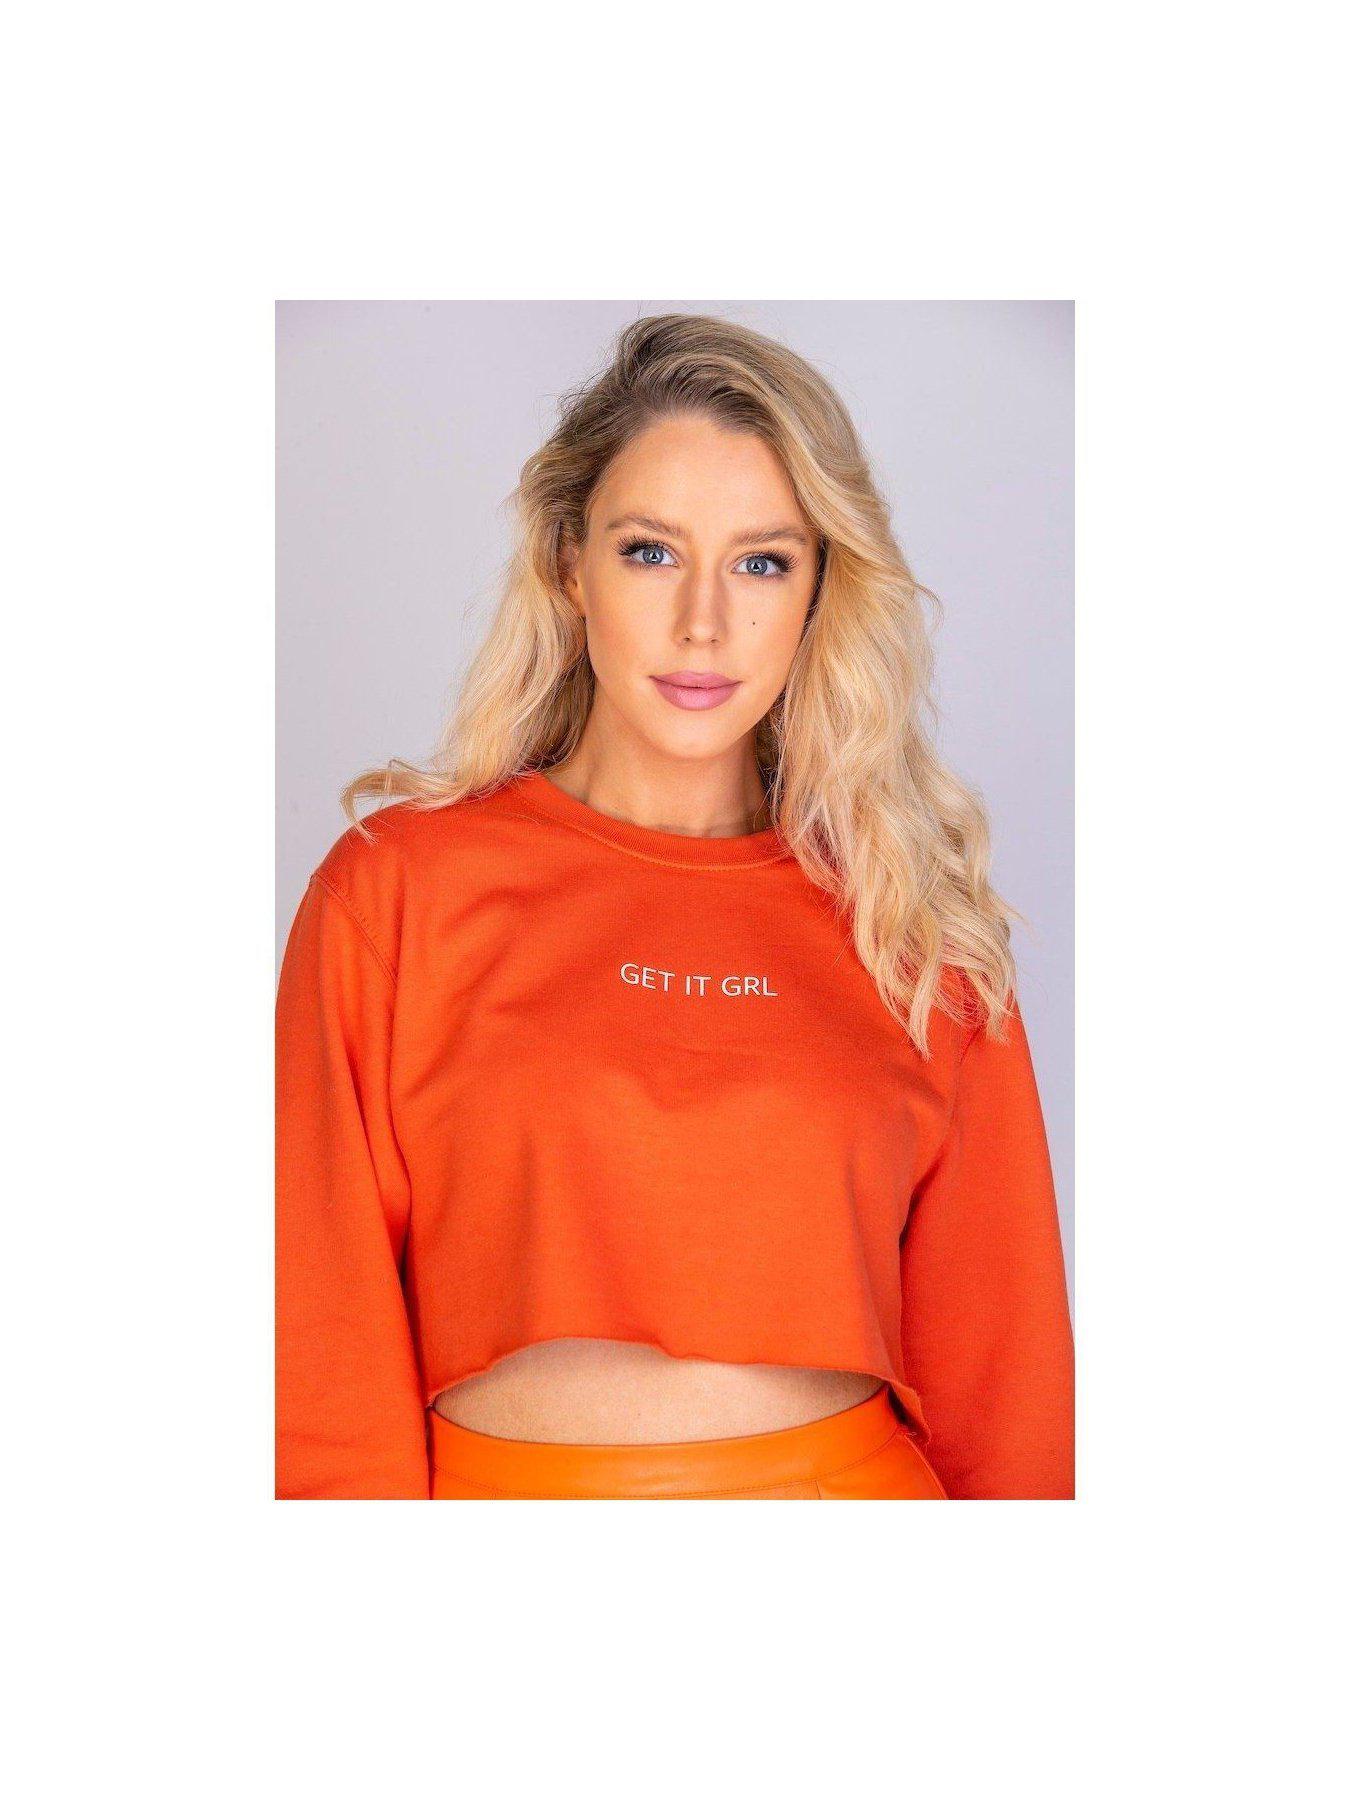 GET IT GRL cropped sweatshirt in orange